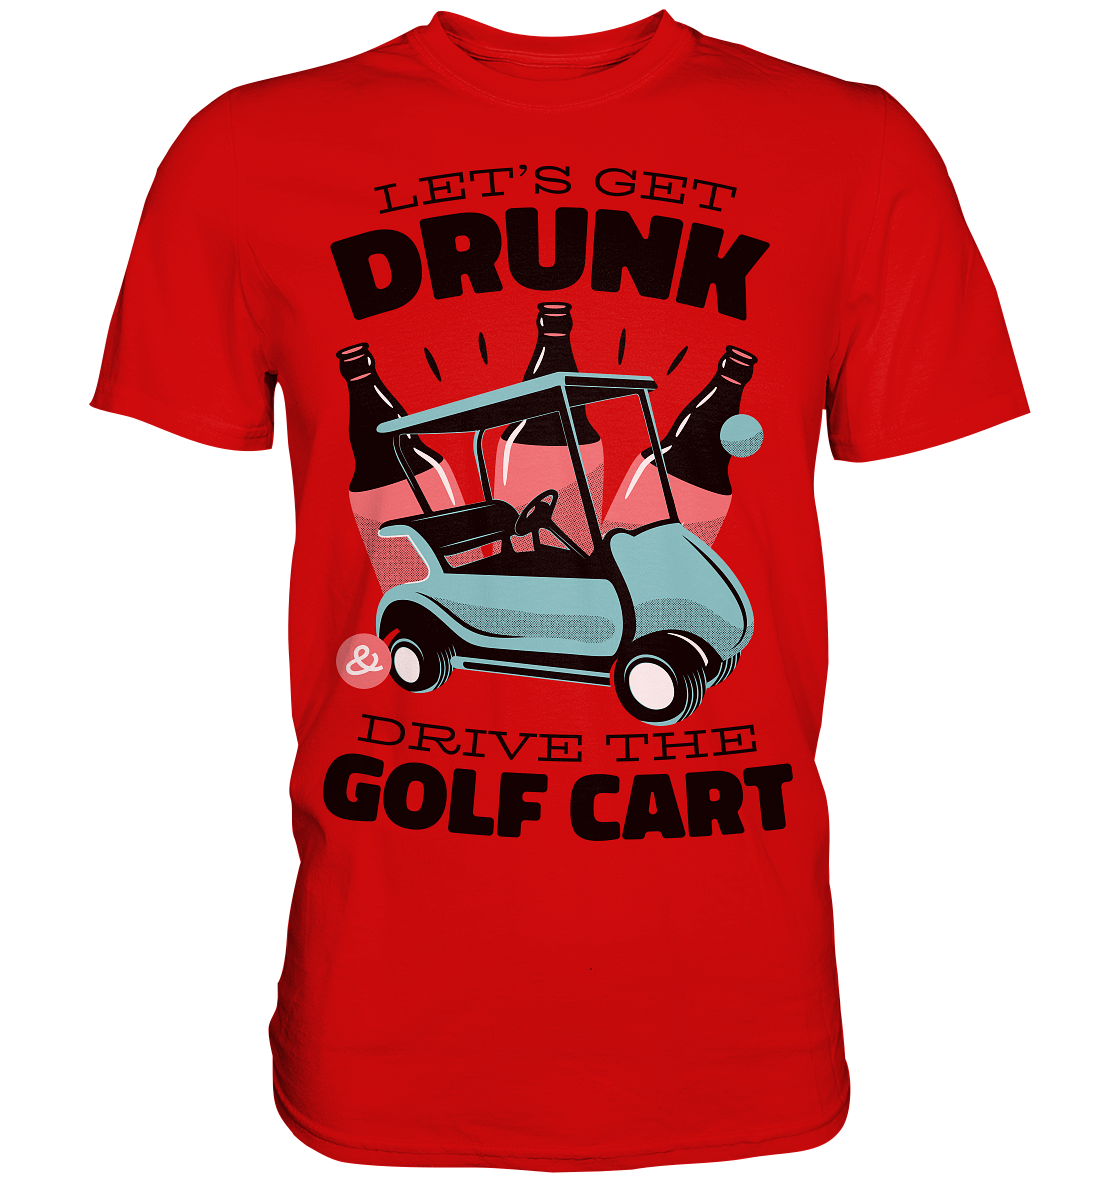 Let's get drunk drive the golf cart, Let's get drunk drive the golf cart - Premium Shirt